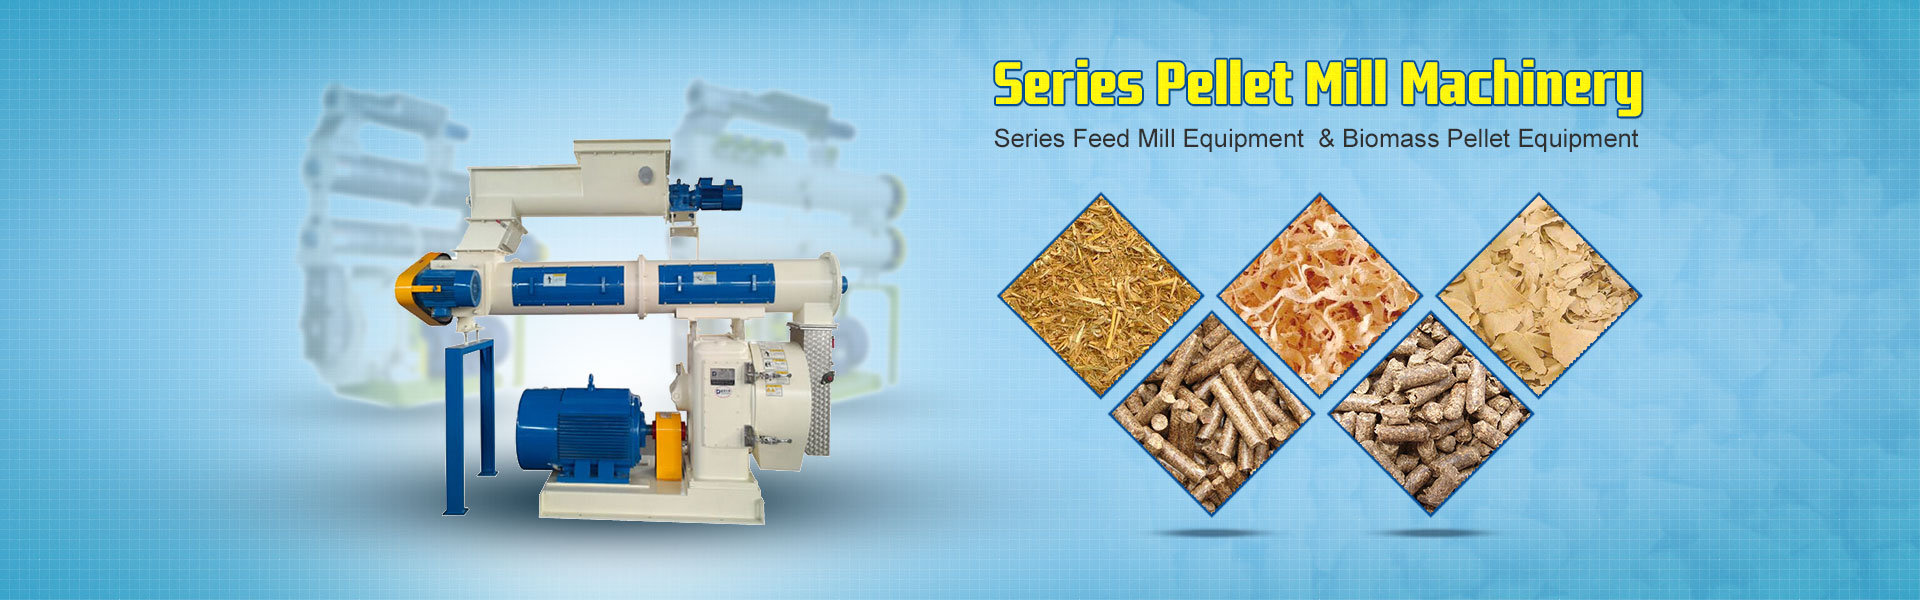 Series pellet mill machinery